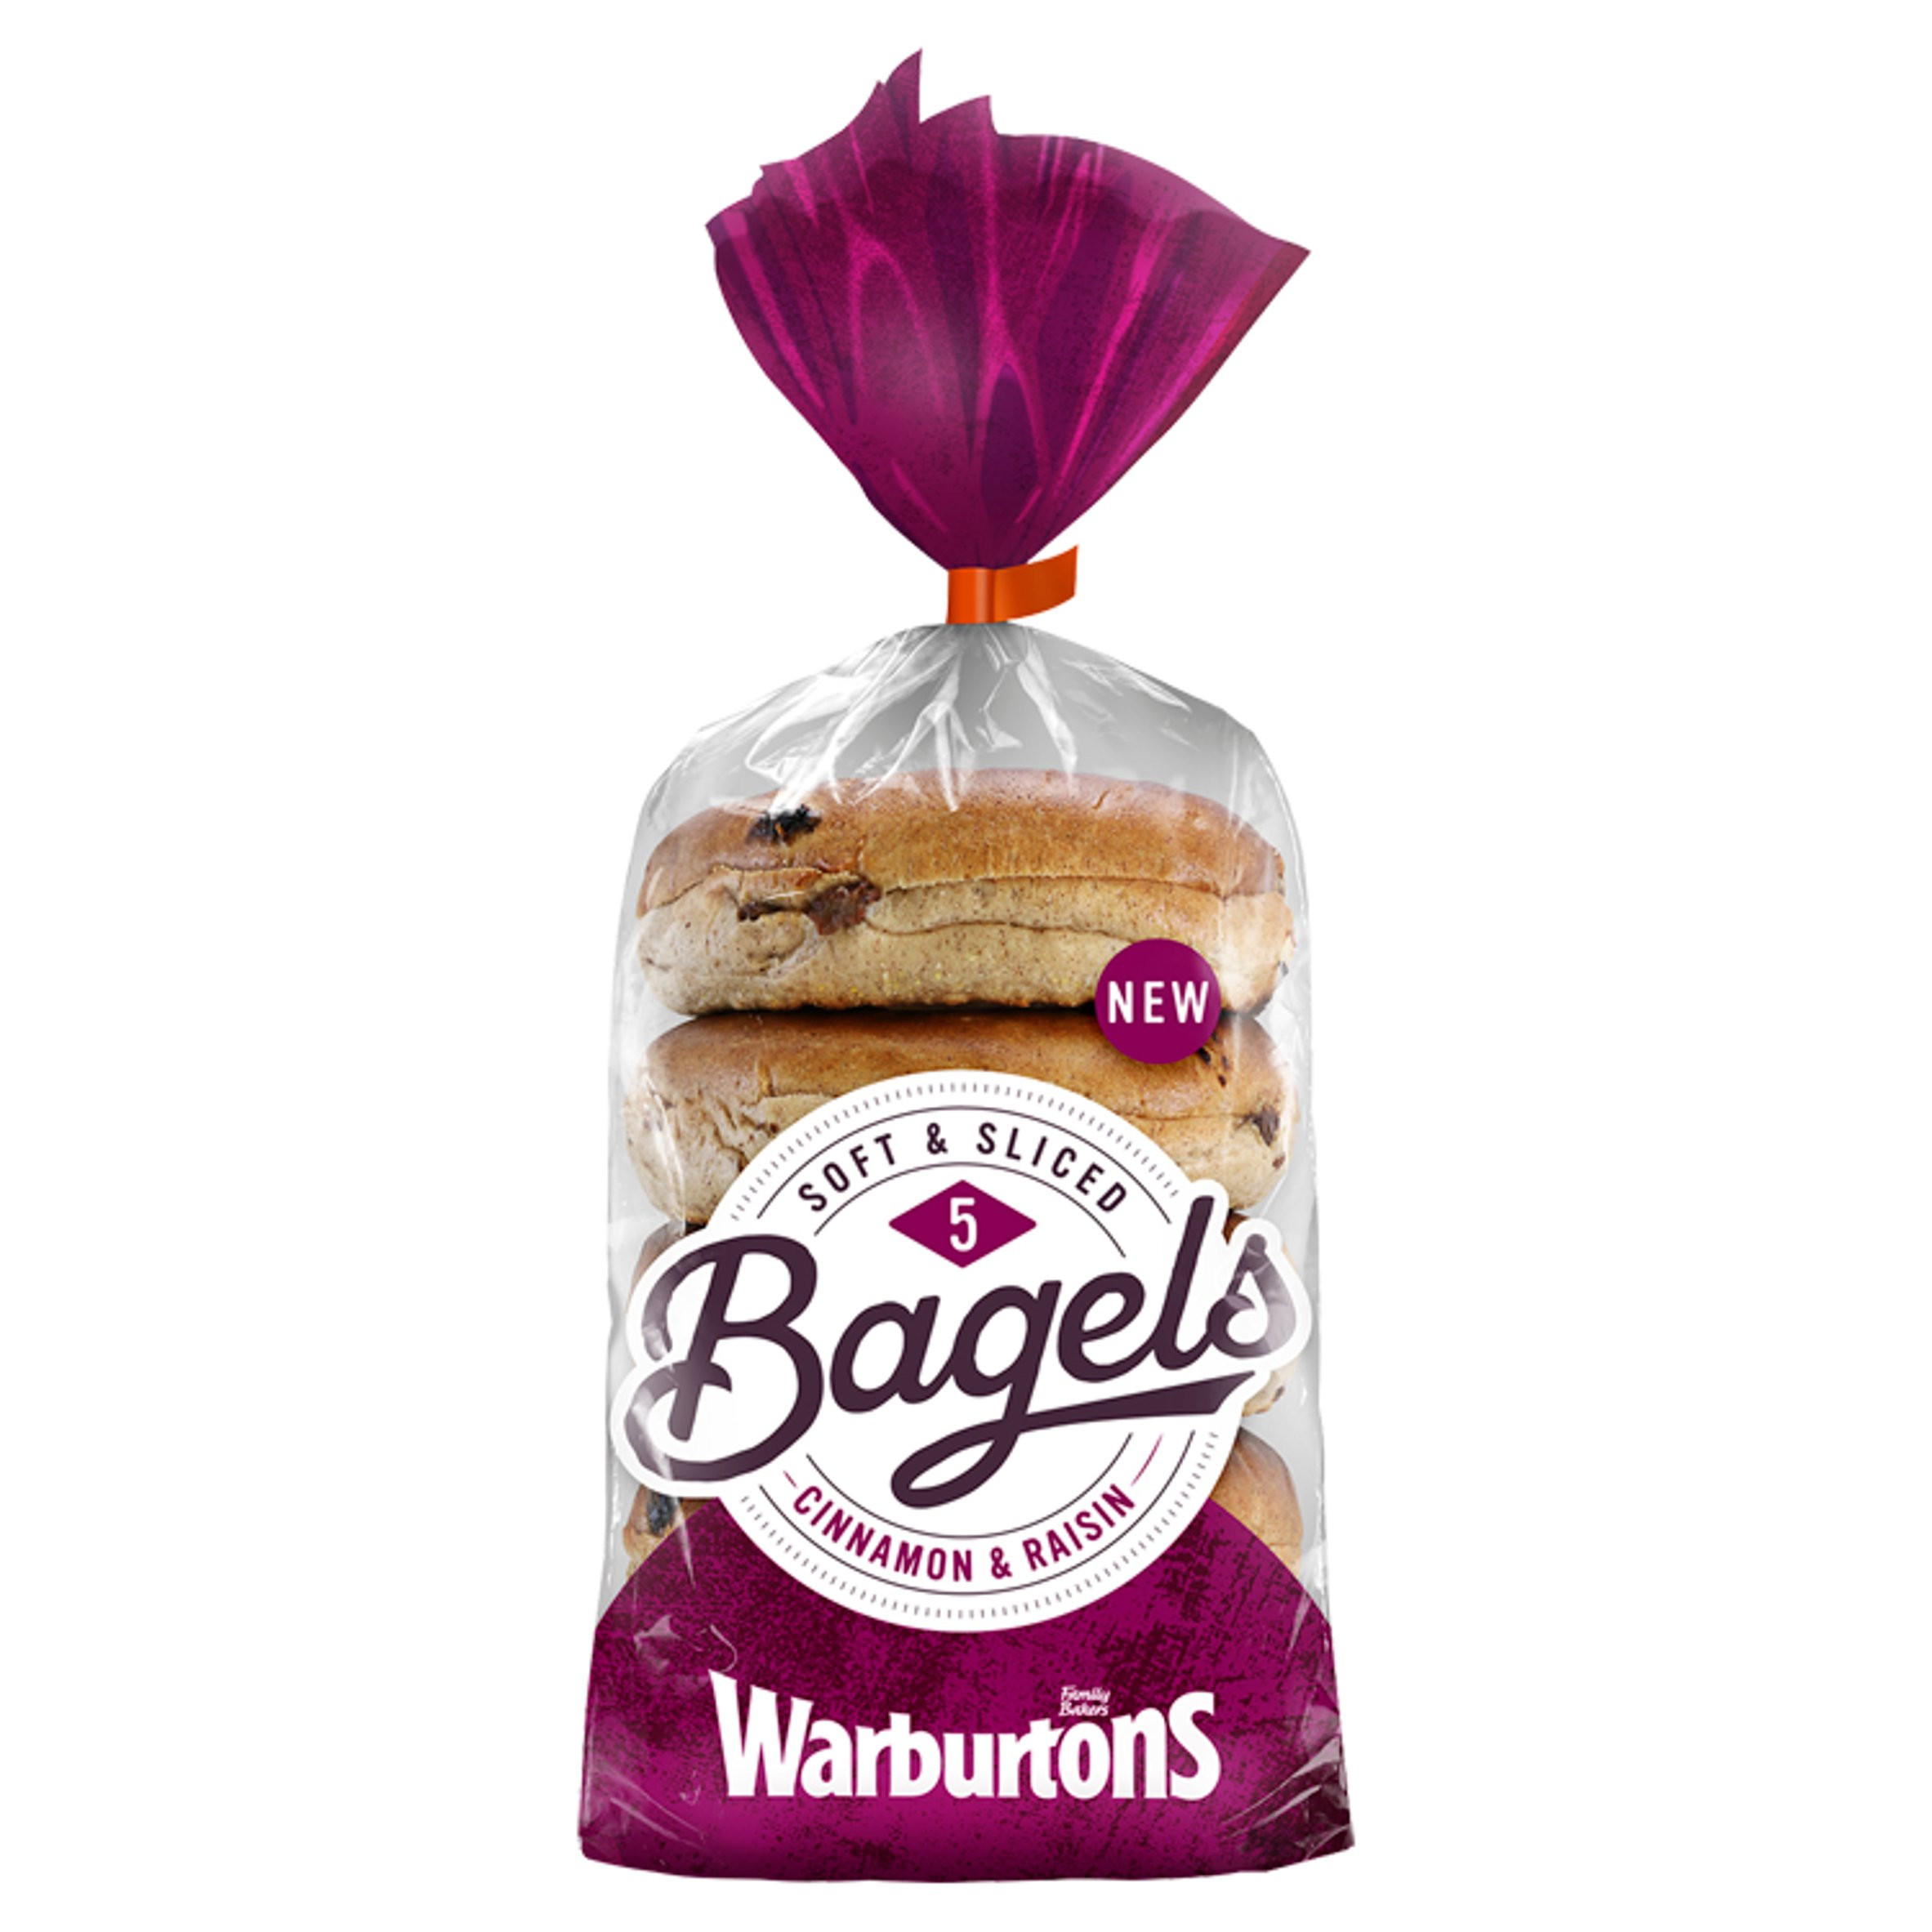 Warburtons 5 Bagels Cinnamon & Raisin | Wraps, Bagels, Pittas & Thins ...